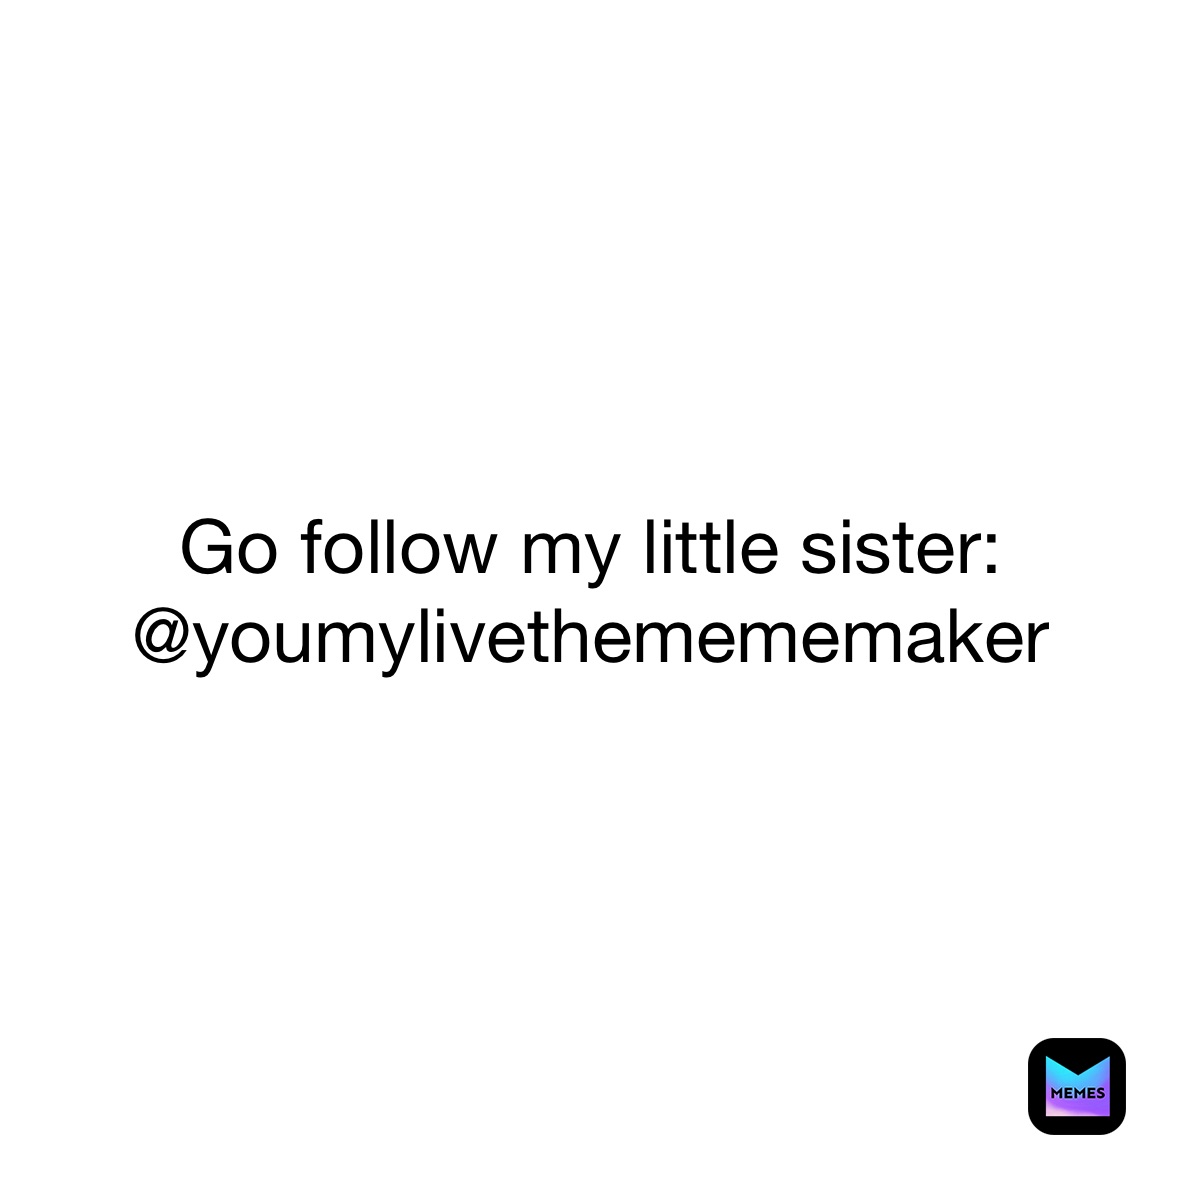 Go follow my little sister:
@youmylivethemememaker